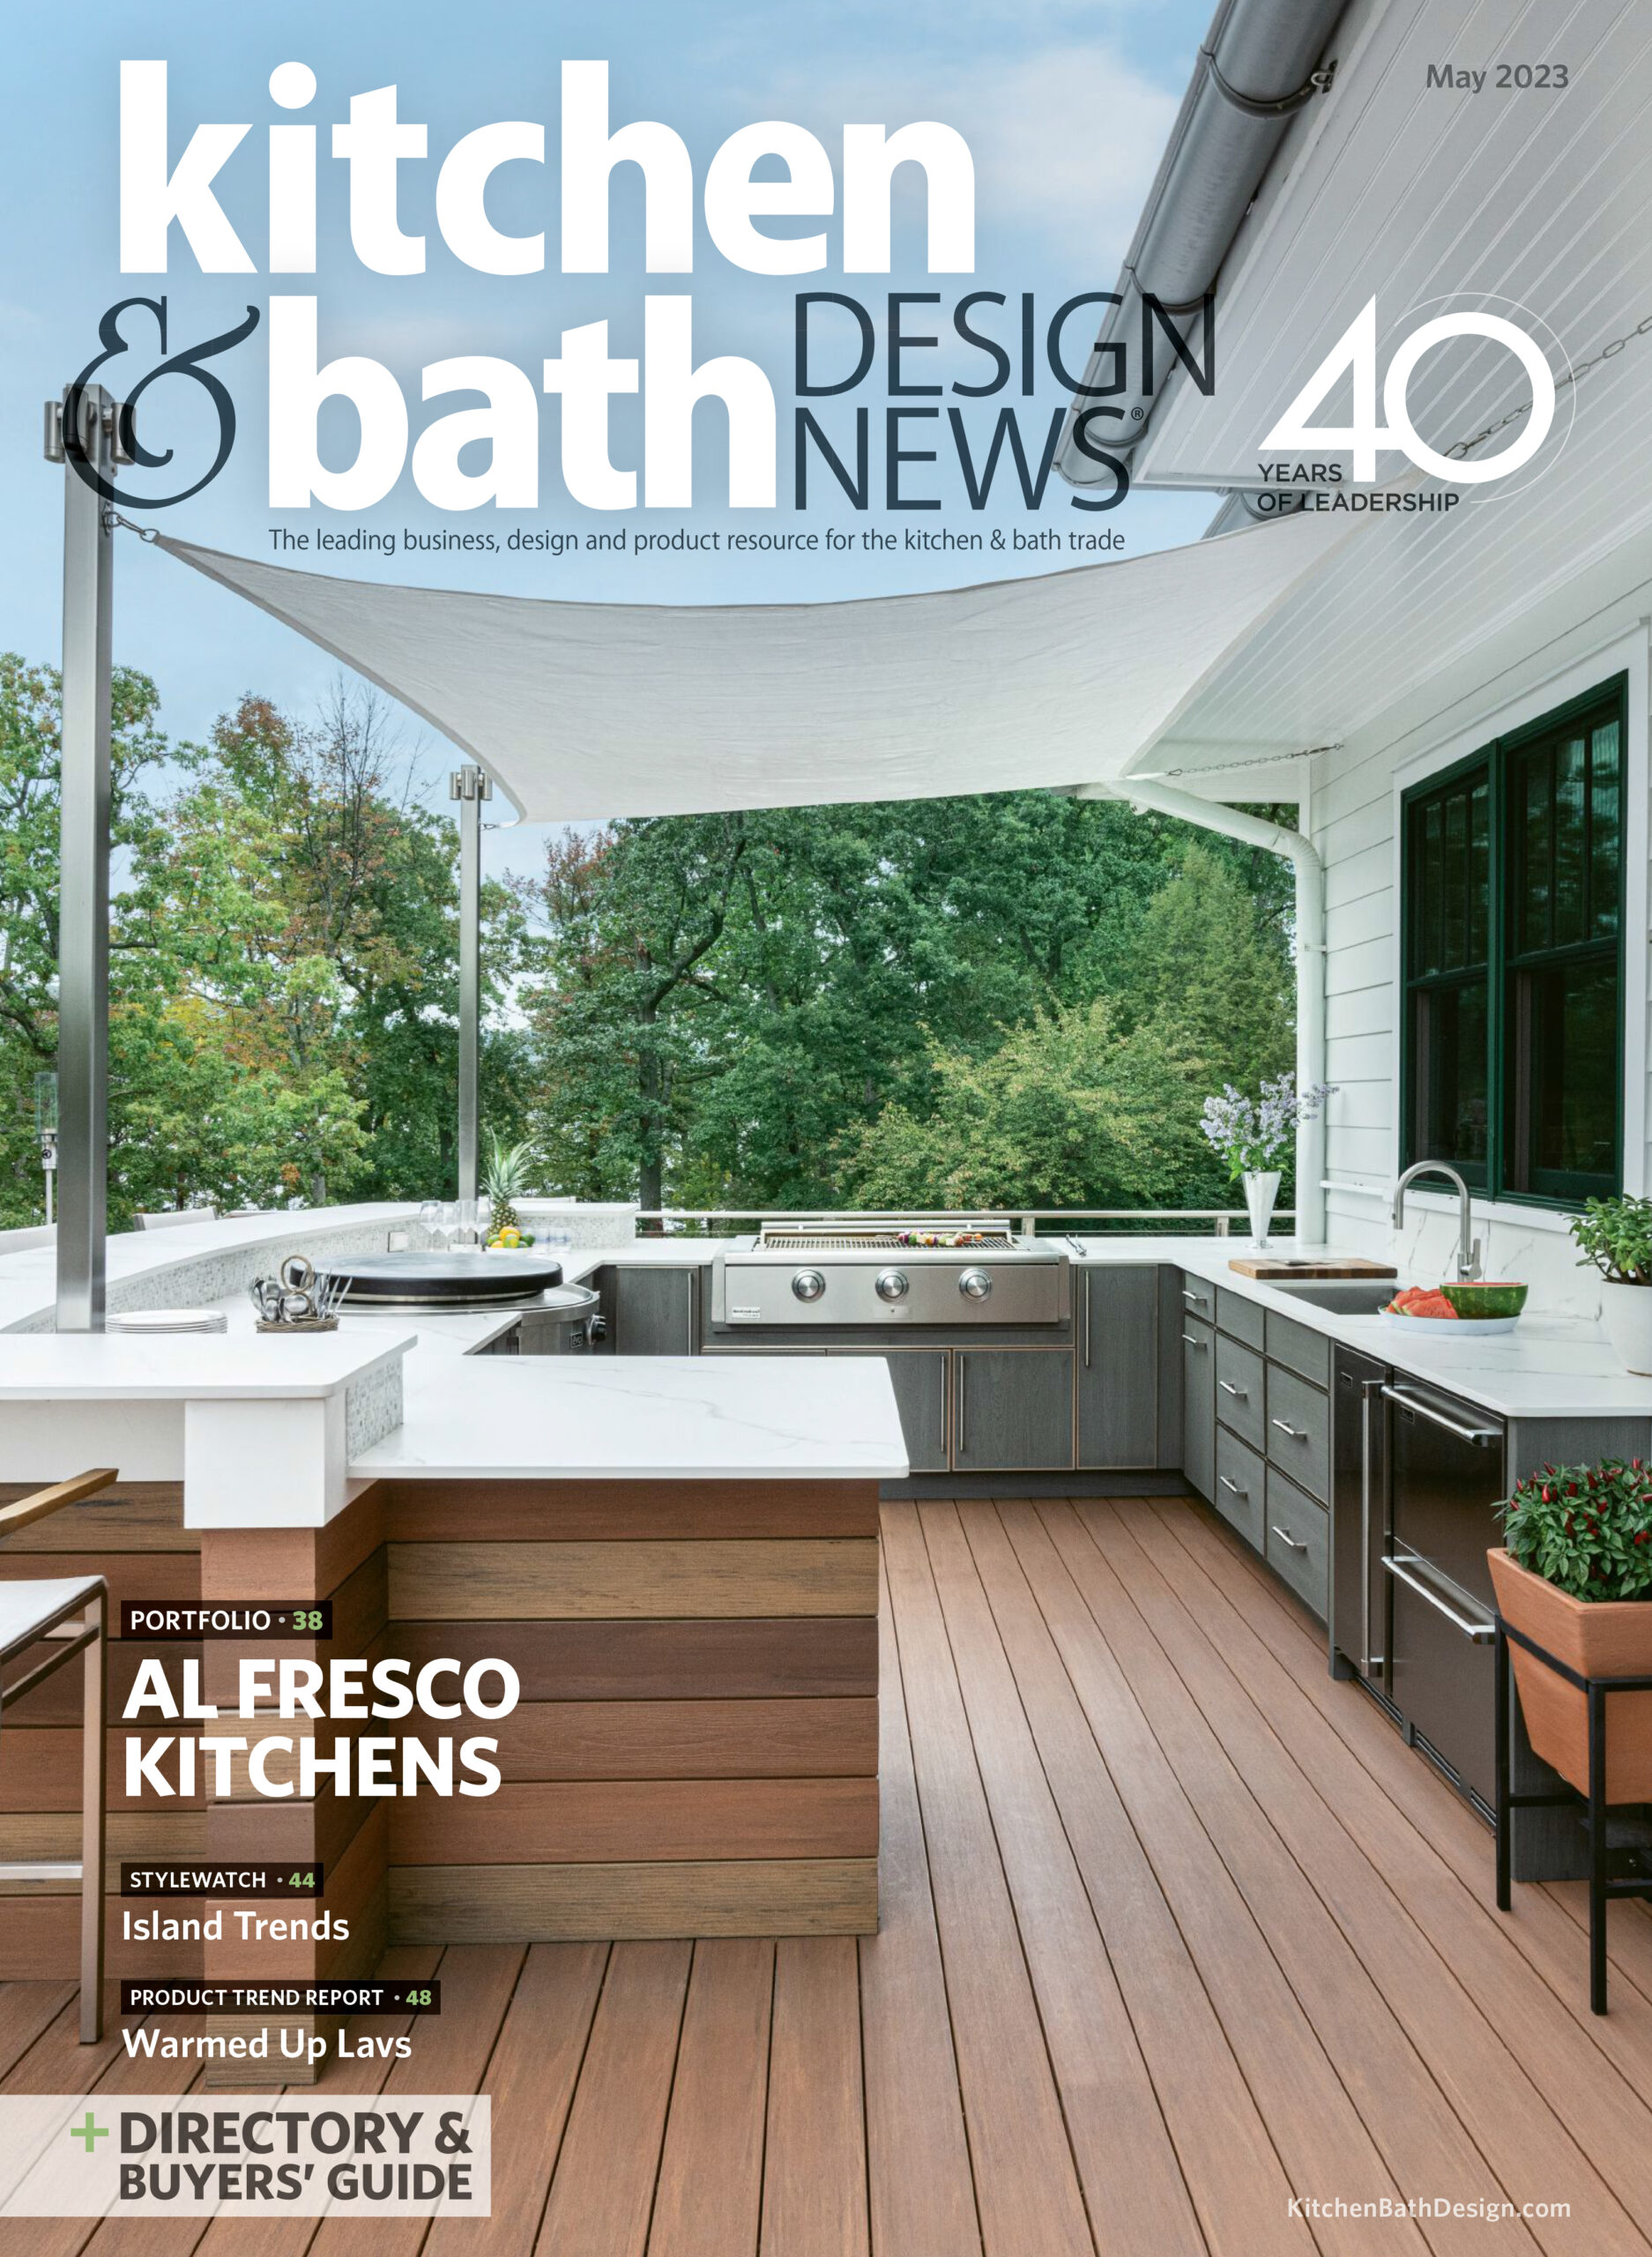 https://caliberappliances.com/wp-content/uploads/2023/06/Caliber_Kitchen-Bath-Design-News-May2023_cover-scaled.jpg